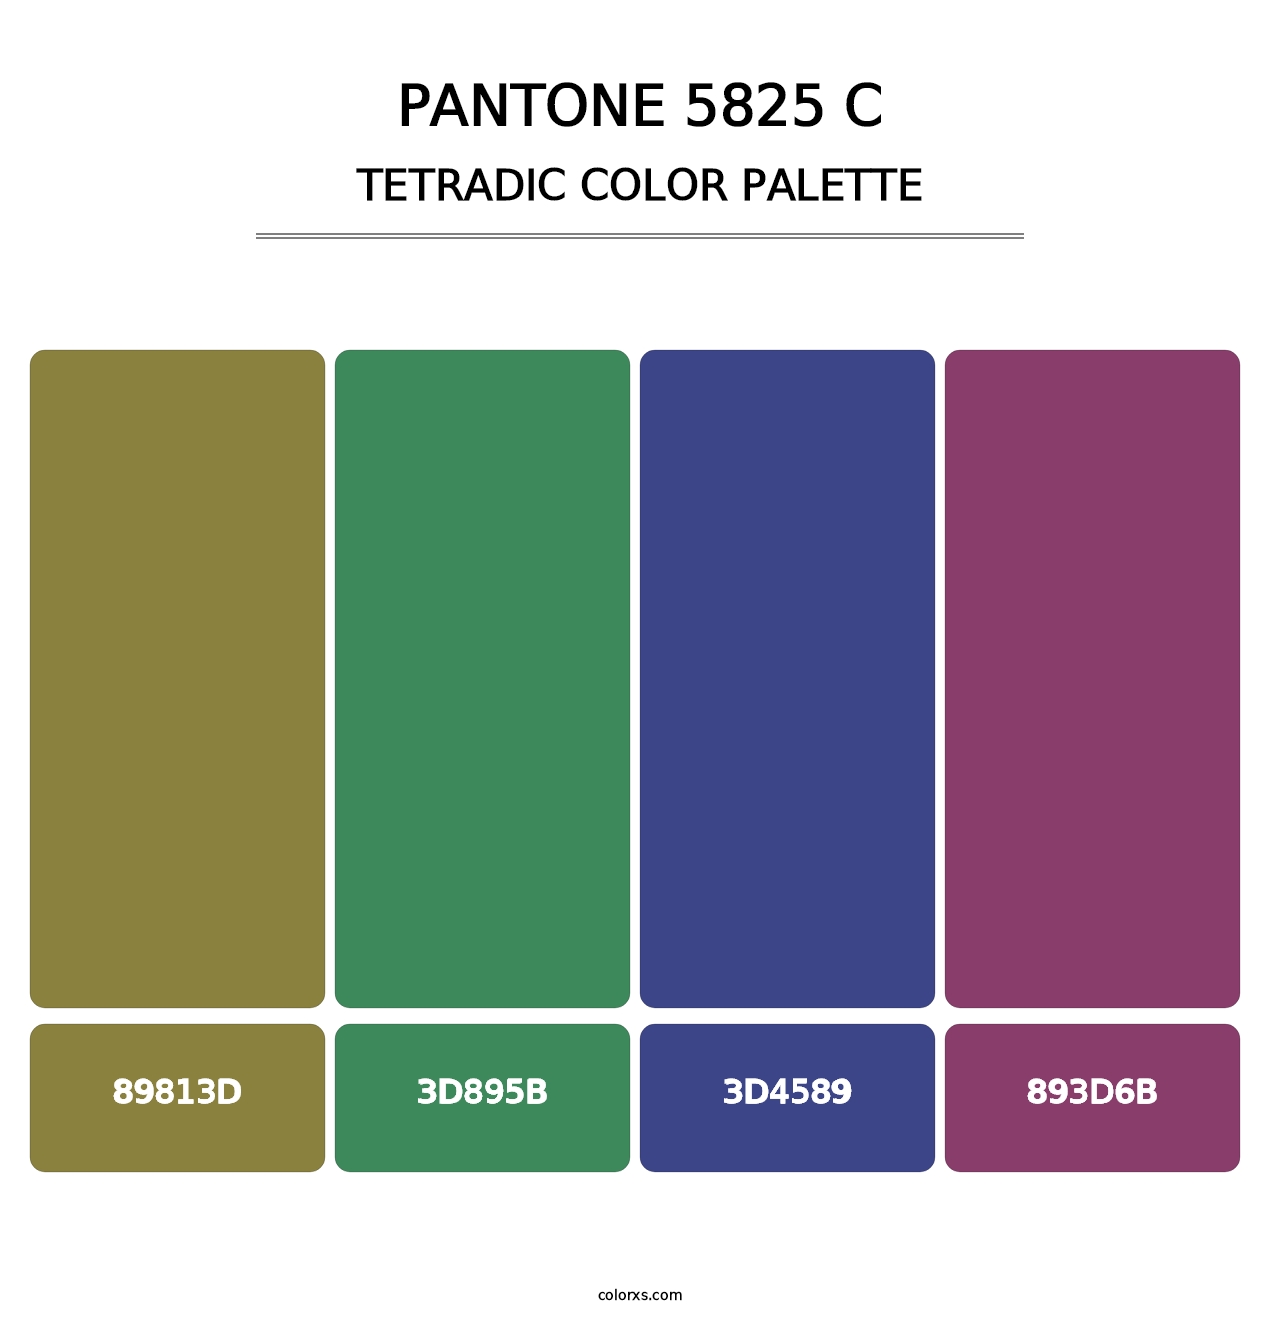 PANTONE 5825 C - Tetradic Color Palette